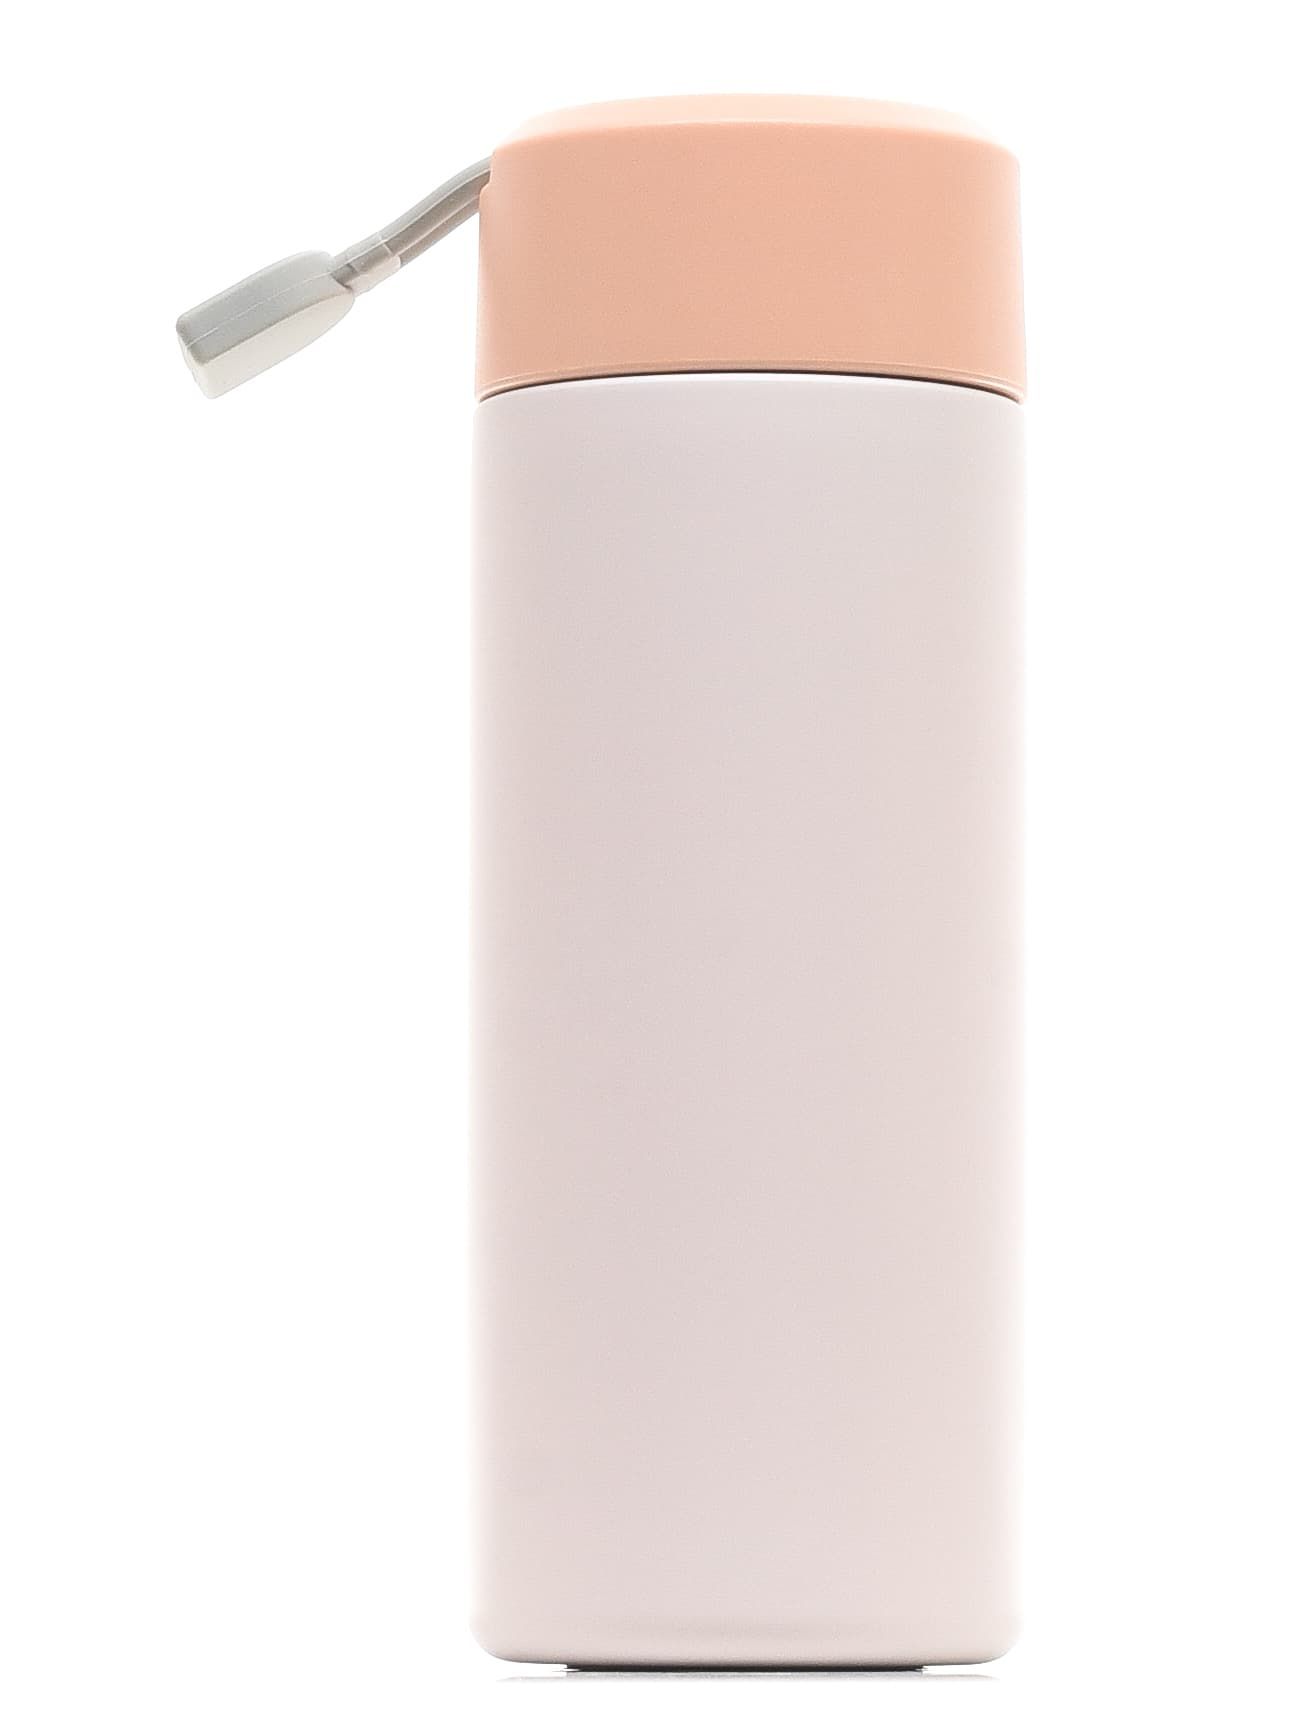 Термобутылка для воды Diller 8764 450 ml (Розовый) фото